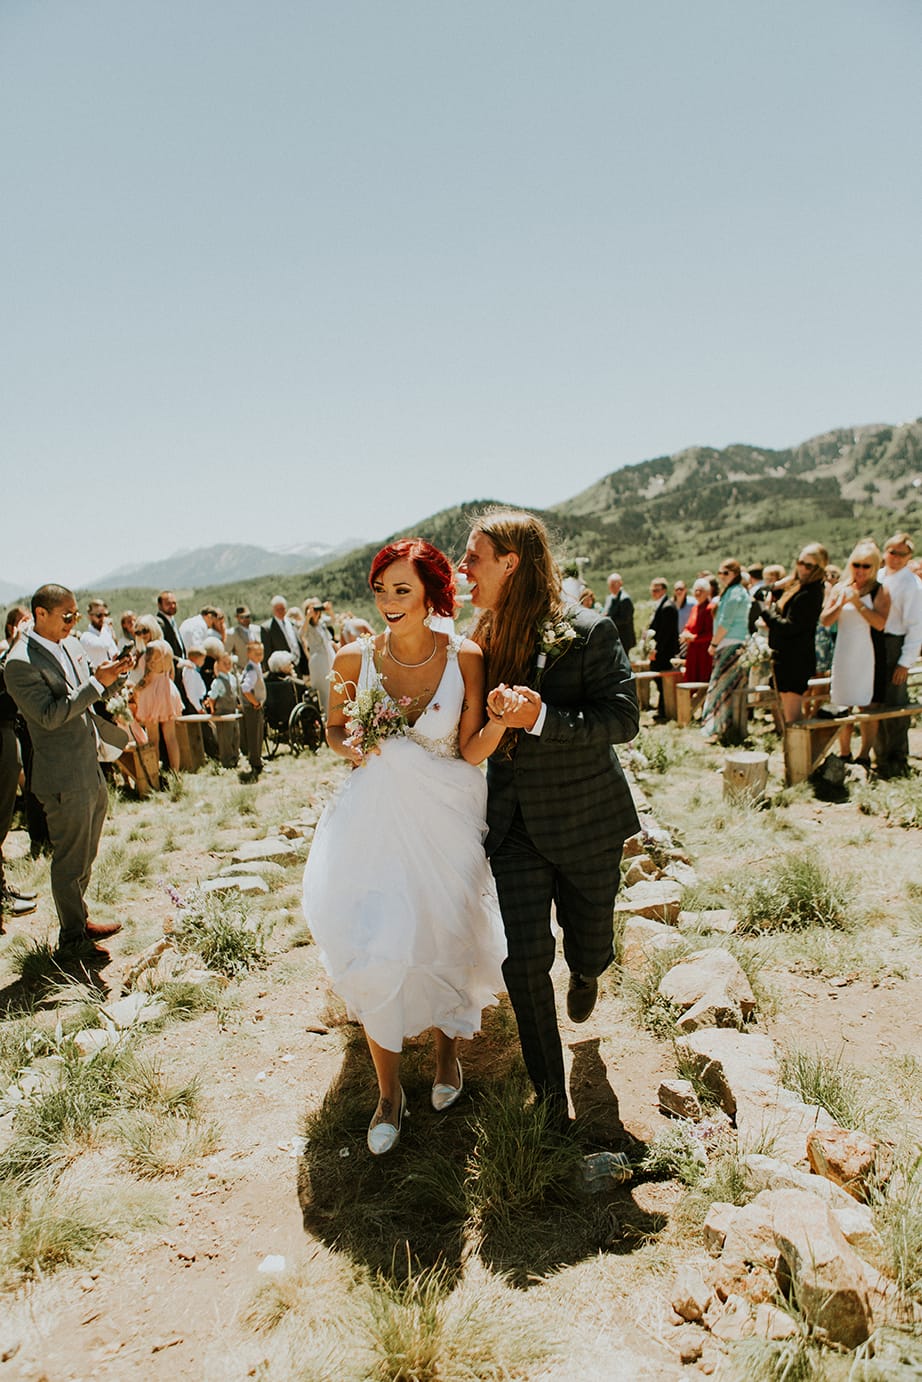 Magical Wedding in Utah: Maggie Bride wearing Phyllis by Maggie Sottero.